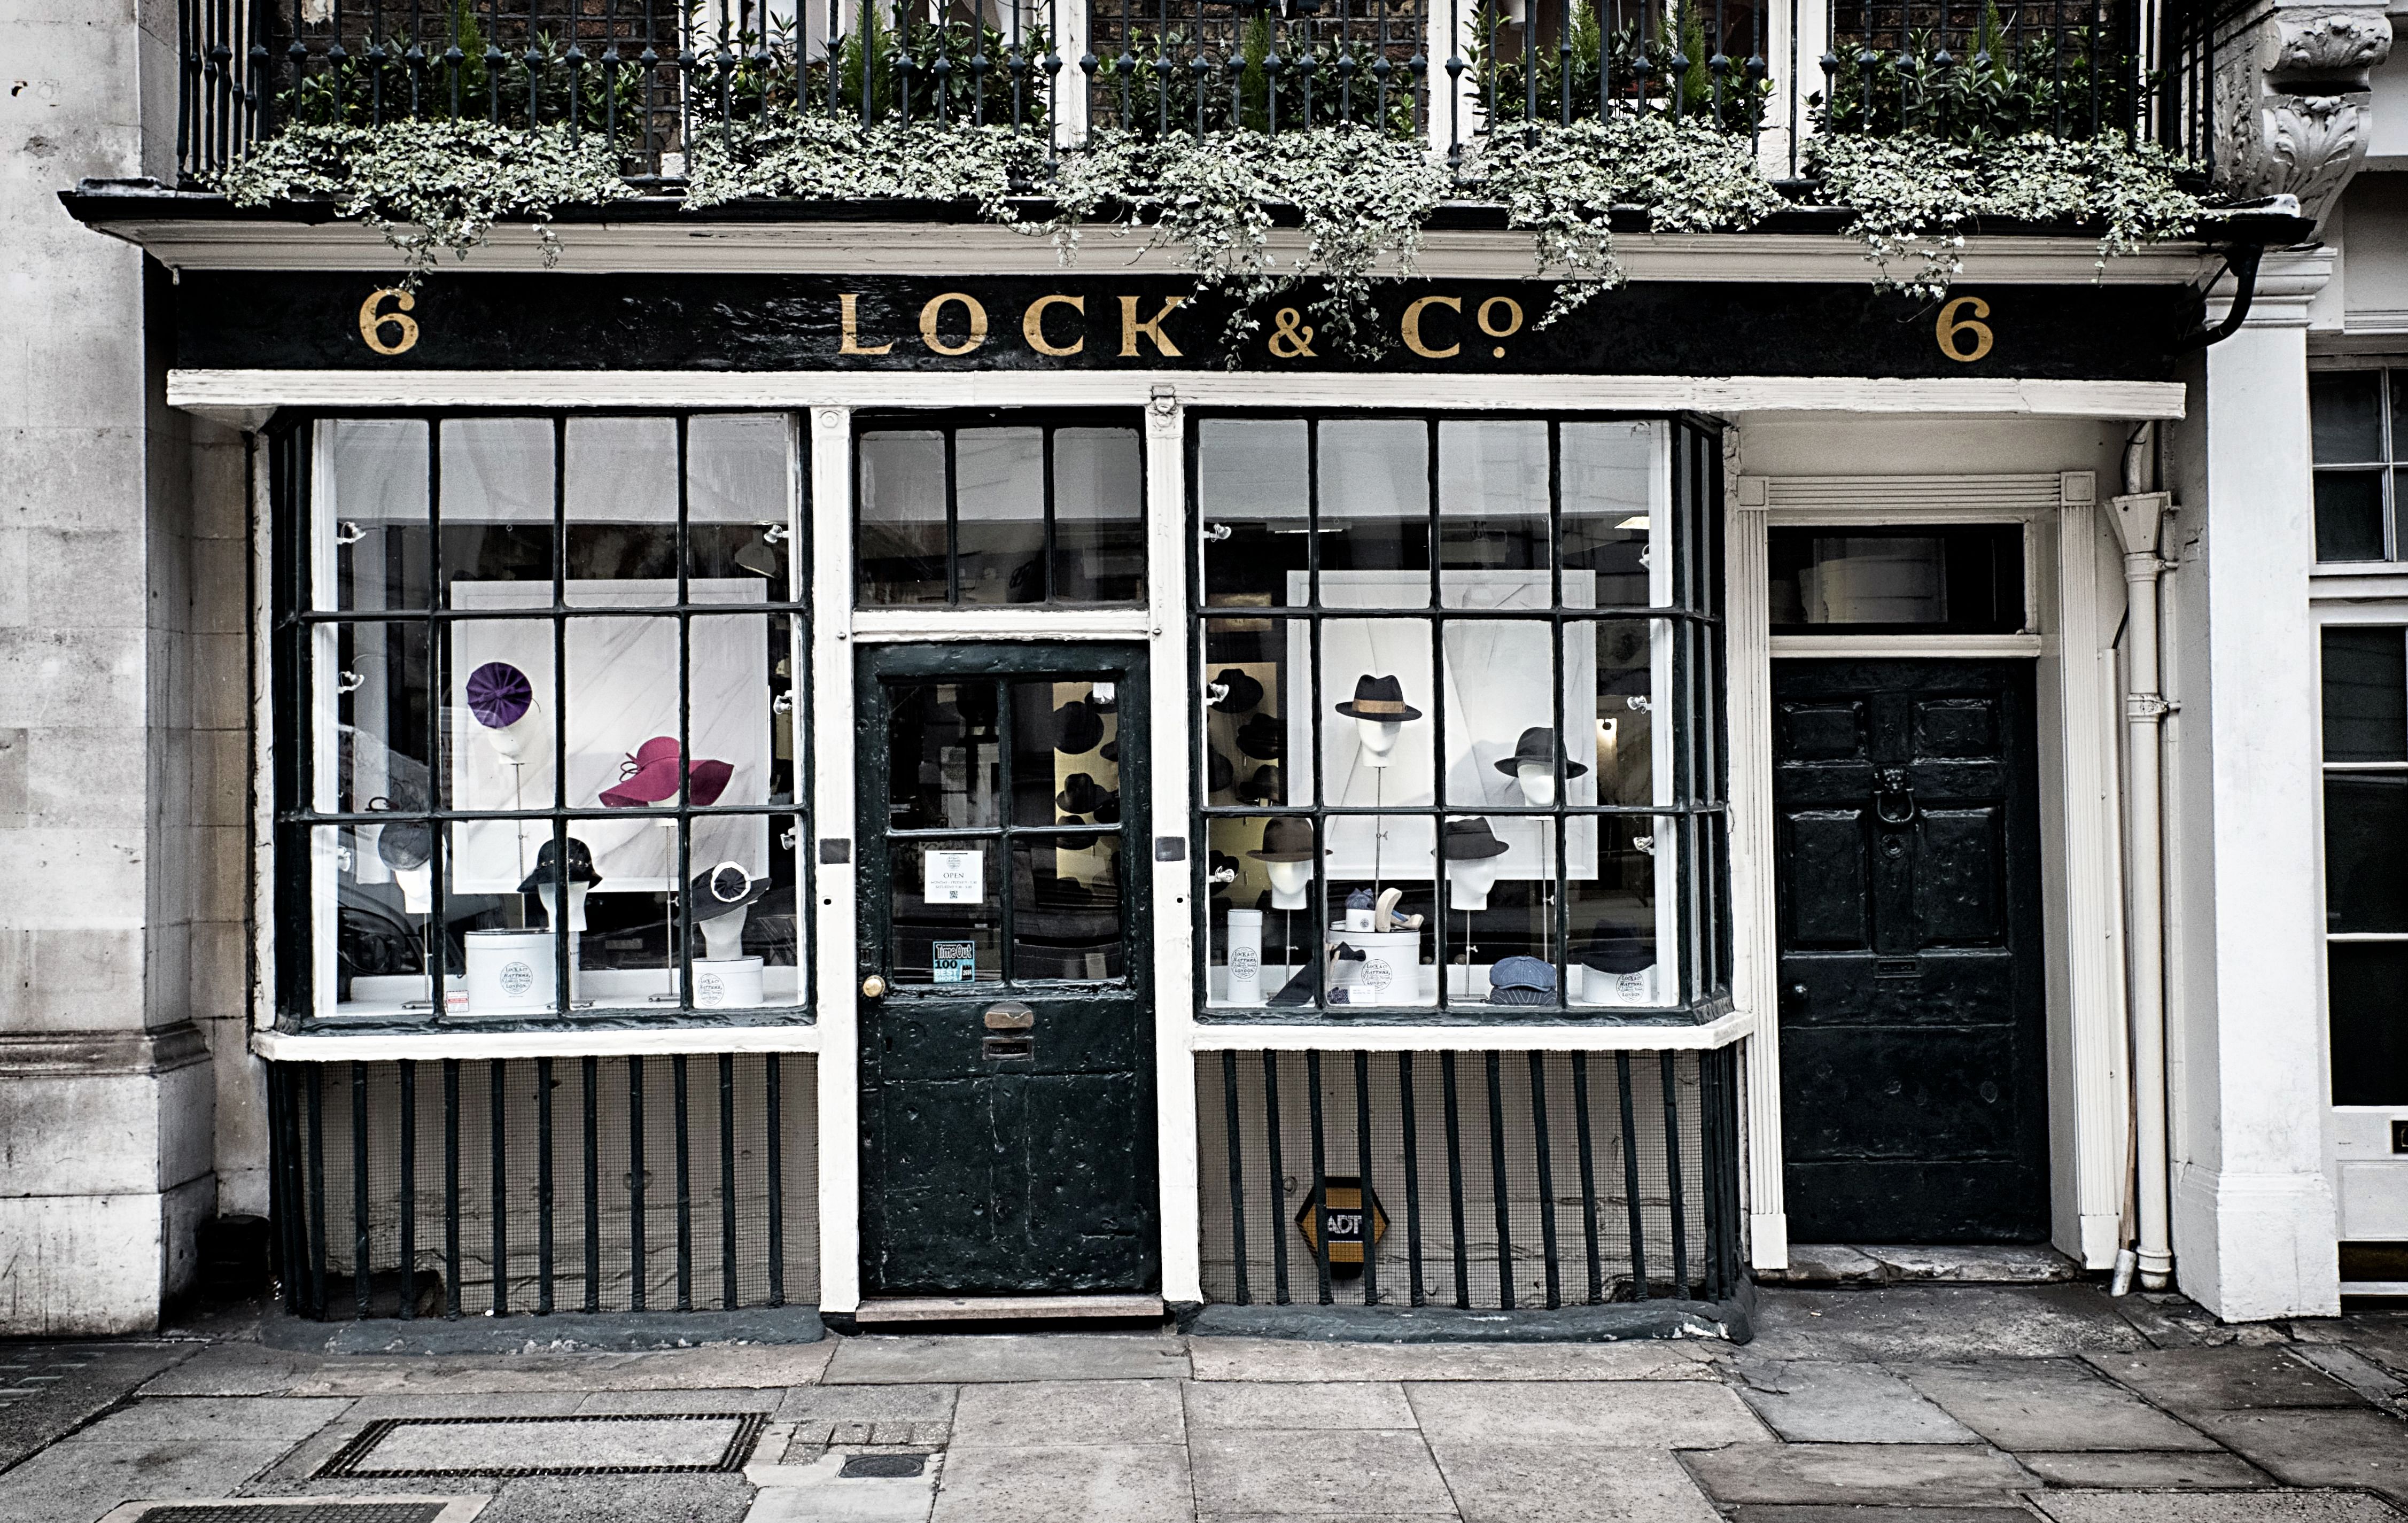 Hat shop. Lock co Hatters London. Самый старый магазин Лондона Lock & co. Hatters. Шляпный магазин в Лондоне. Бутики шляпок в Лондоне.